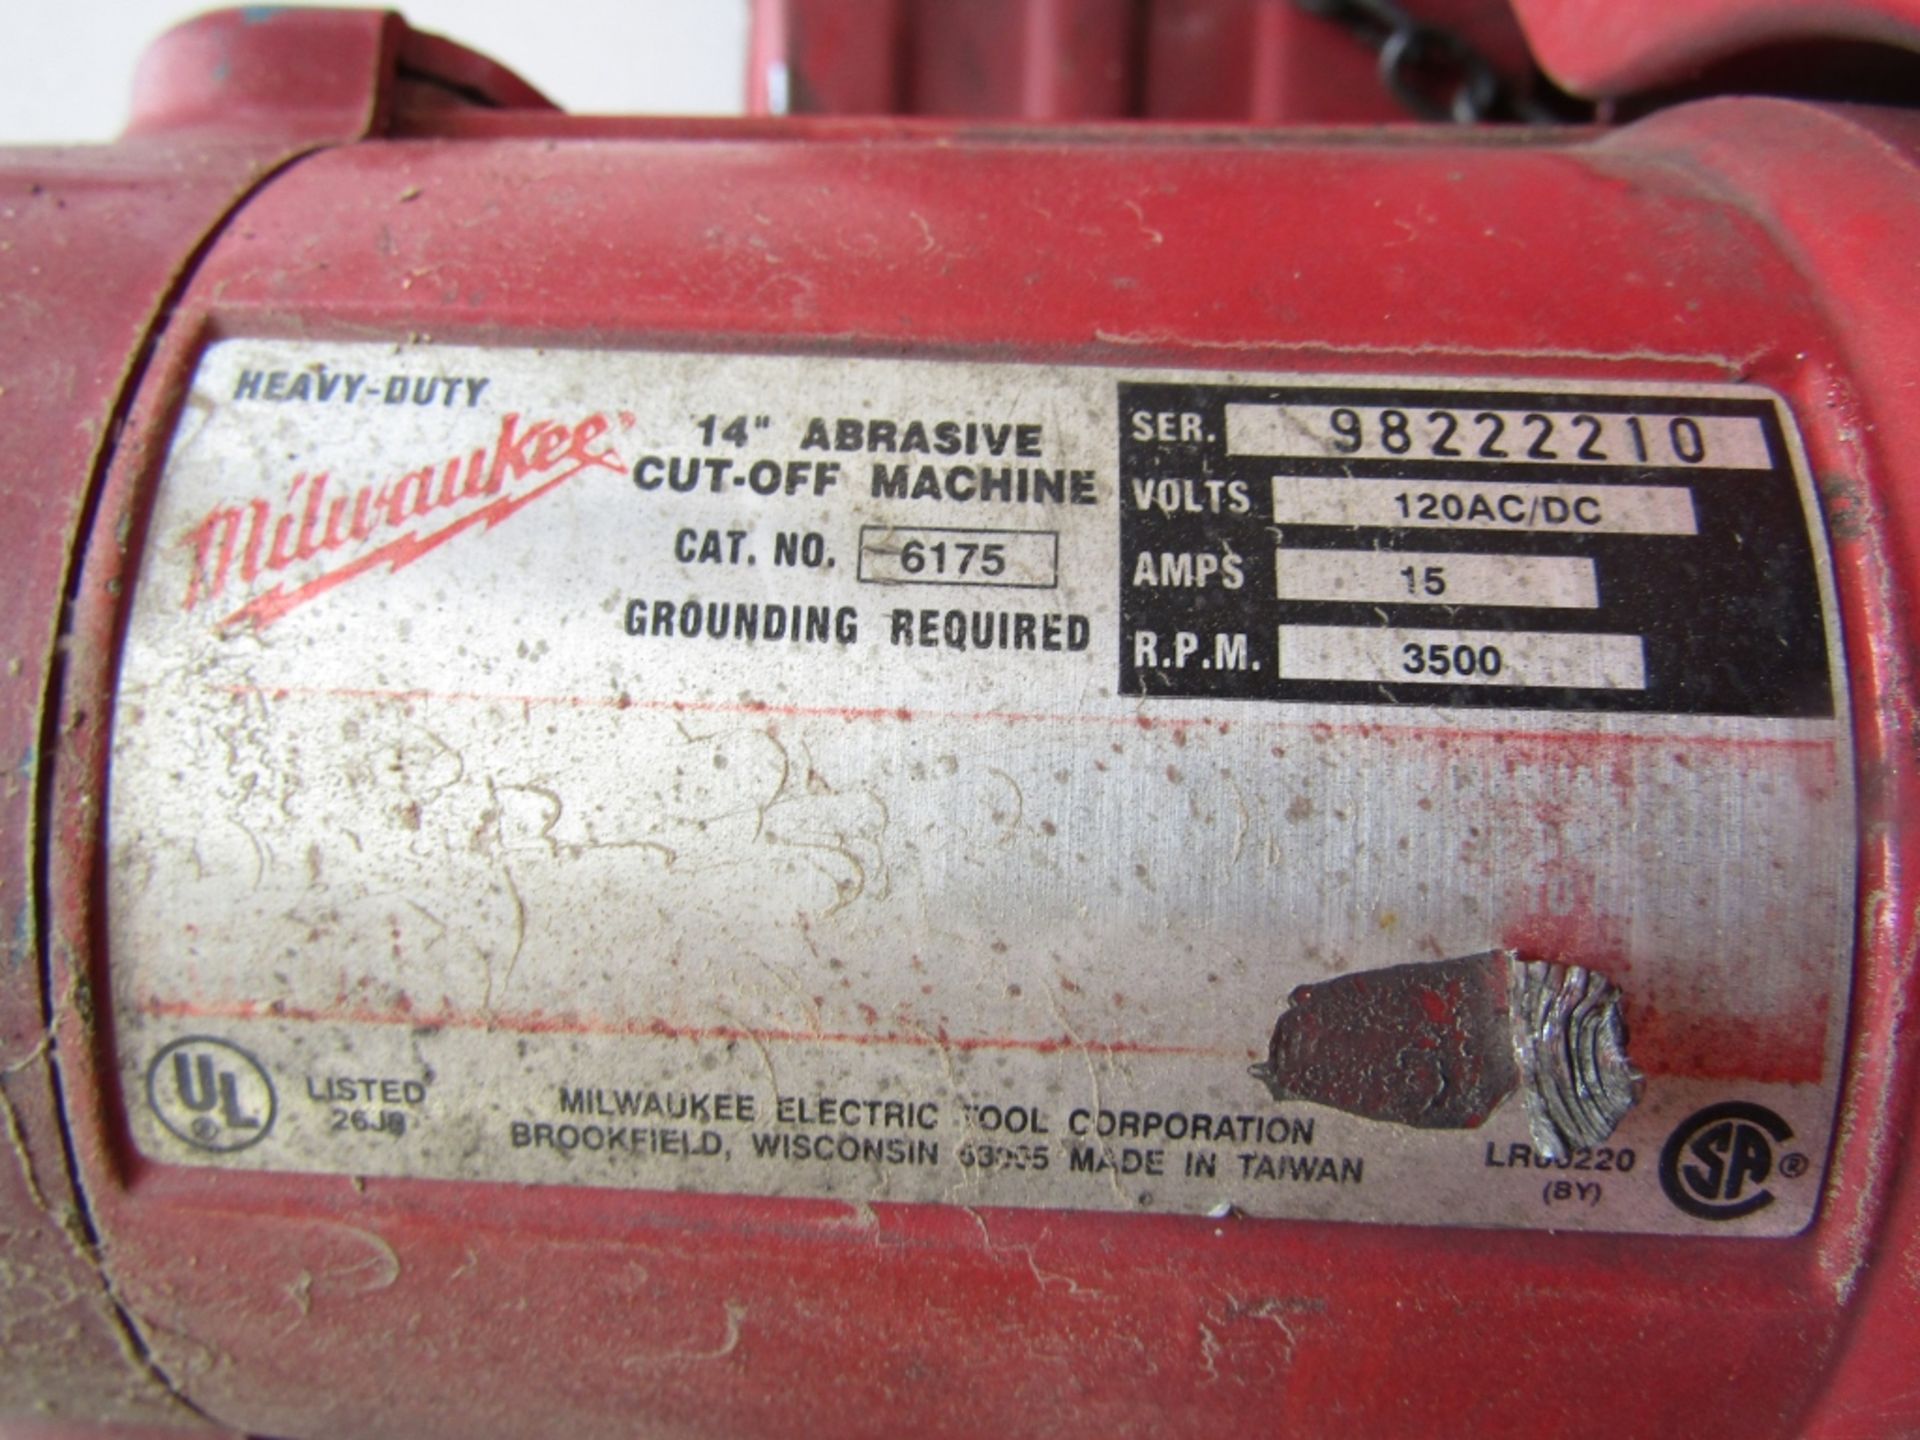 14" Milwaukee Cut Off Machine, Serial #98222210 120 Volt, 3500 R.P.M. - Image 2 of 2